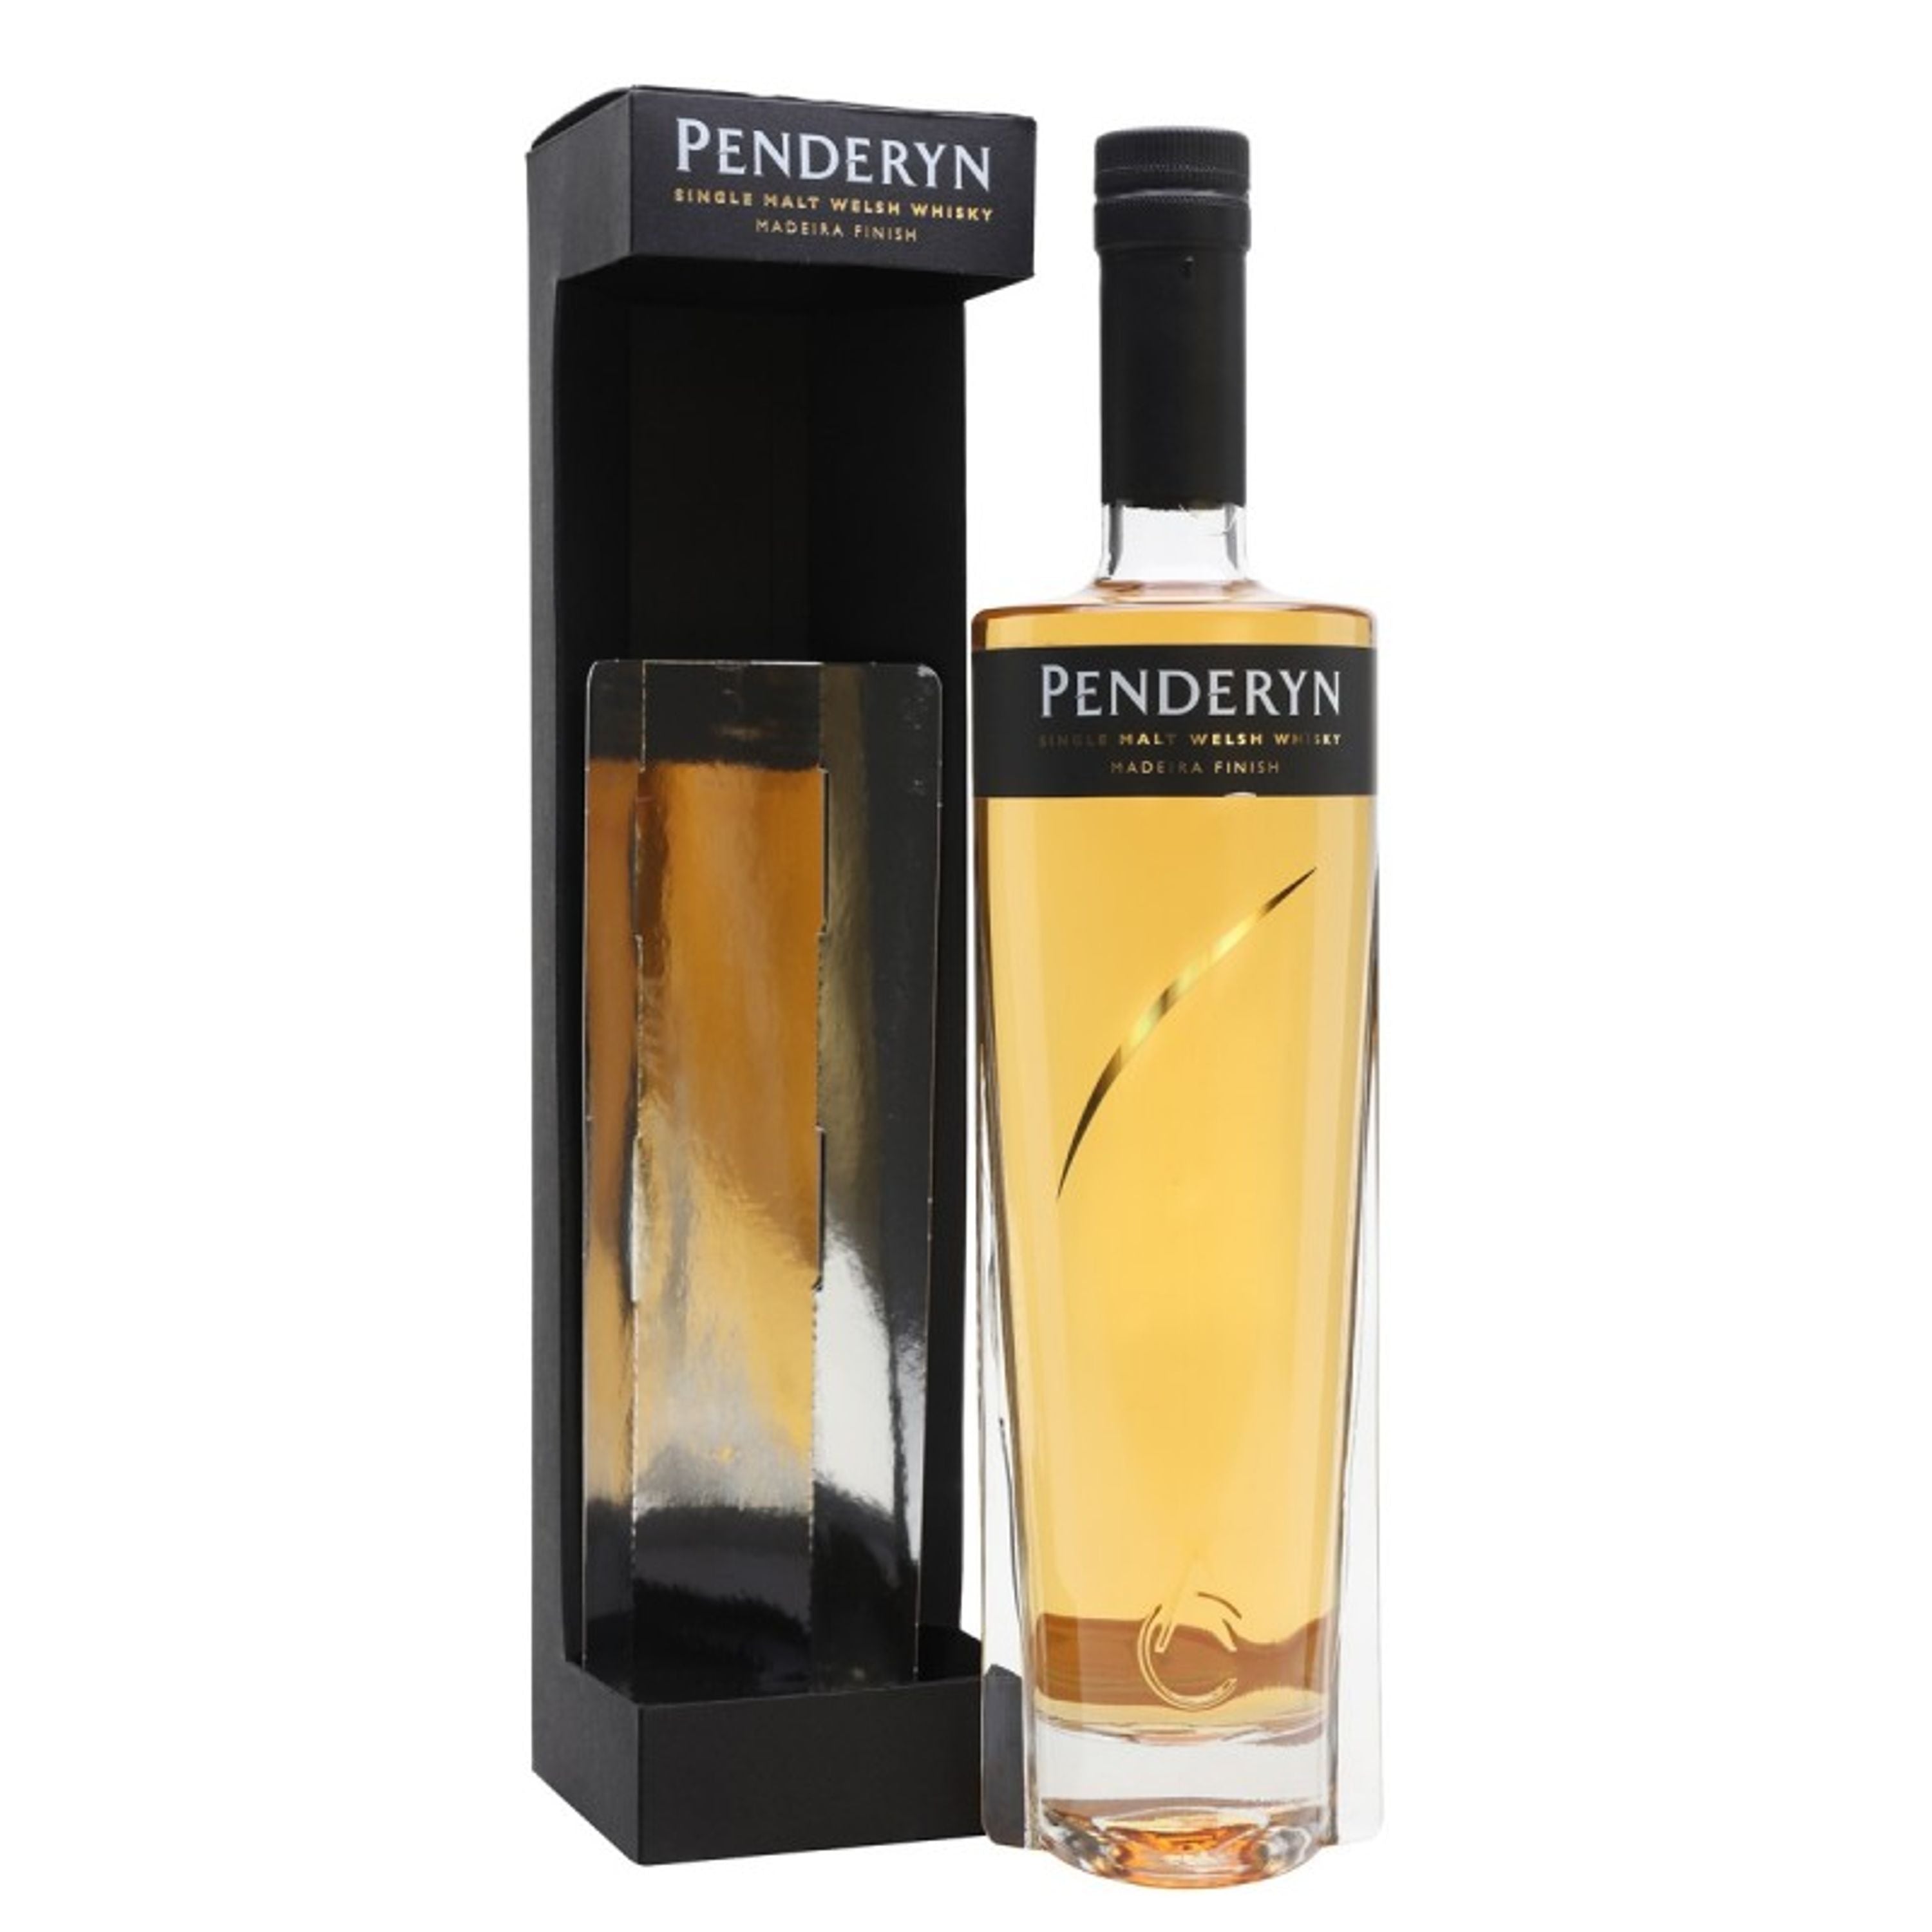 Penderyn Madeira Wales Single Malt Whisky 0,7l alc. 46 Vol.-%